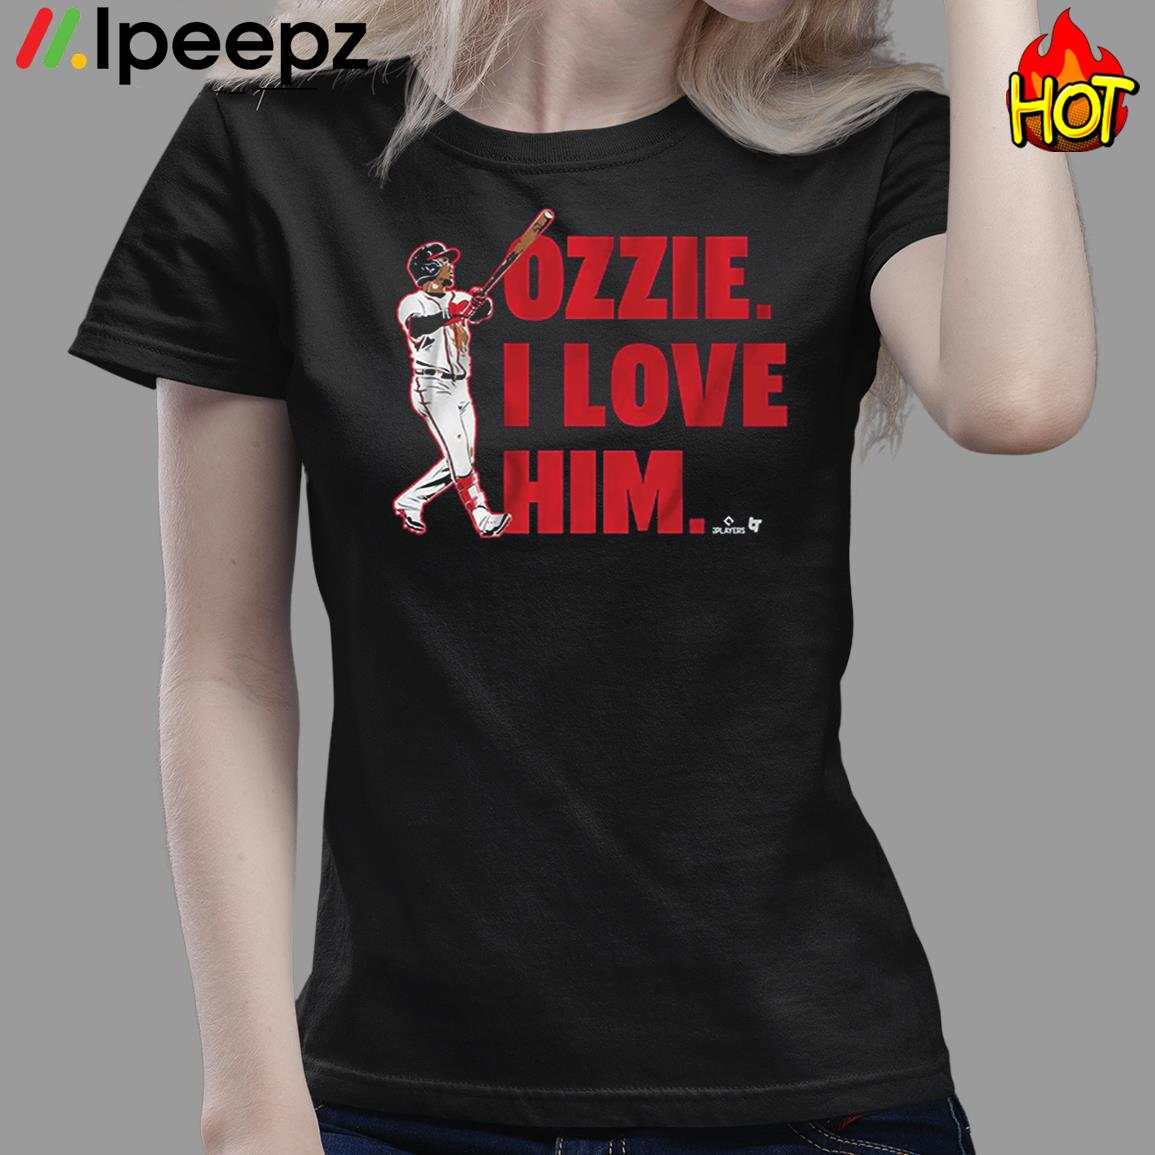 Ipeepz Ozzie Albies I Love Him Shirt